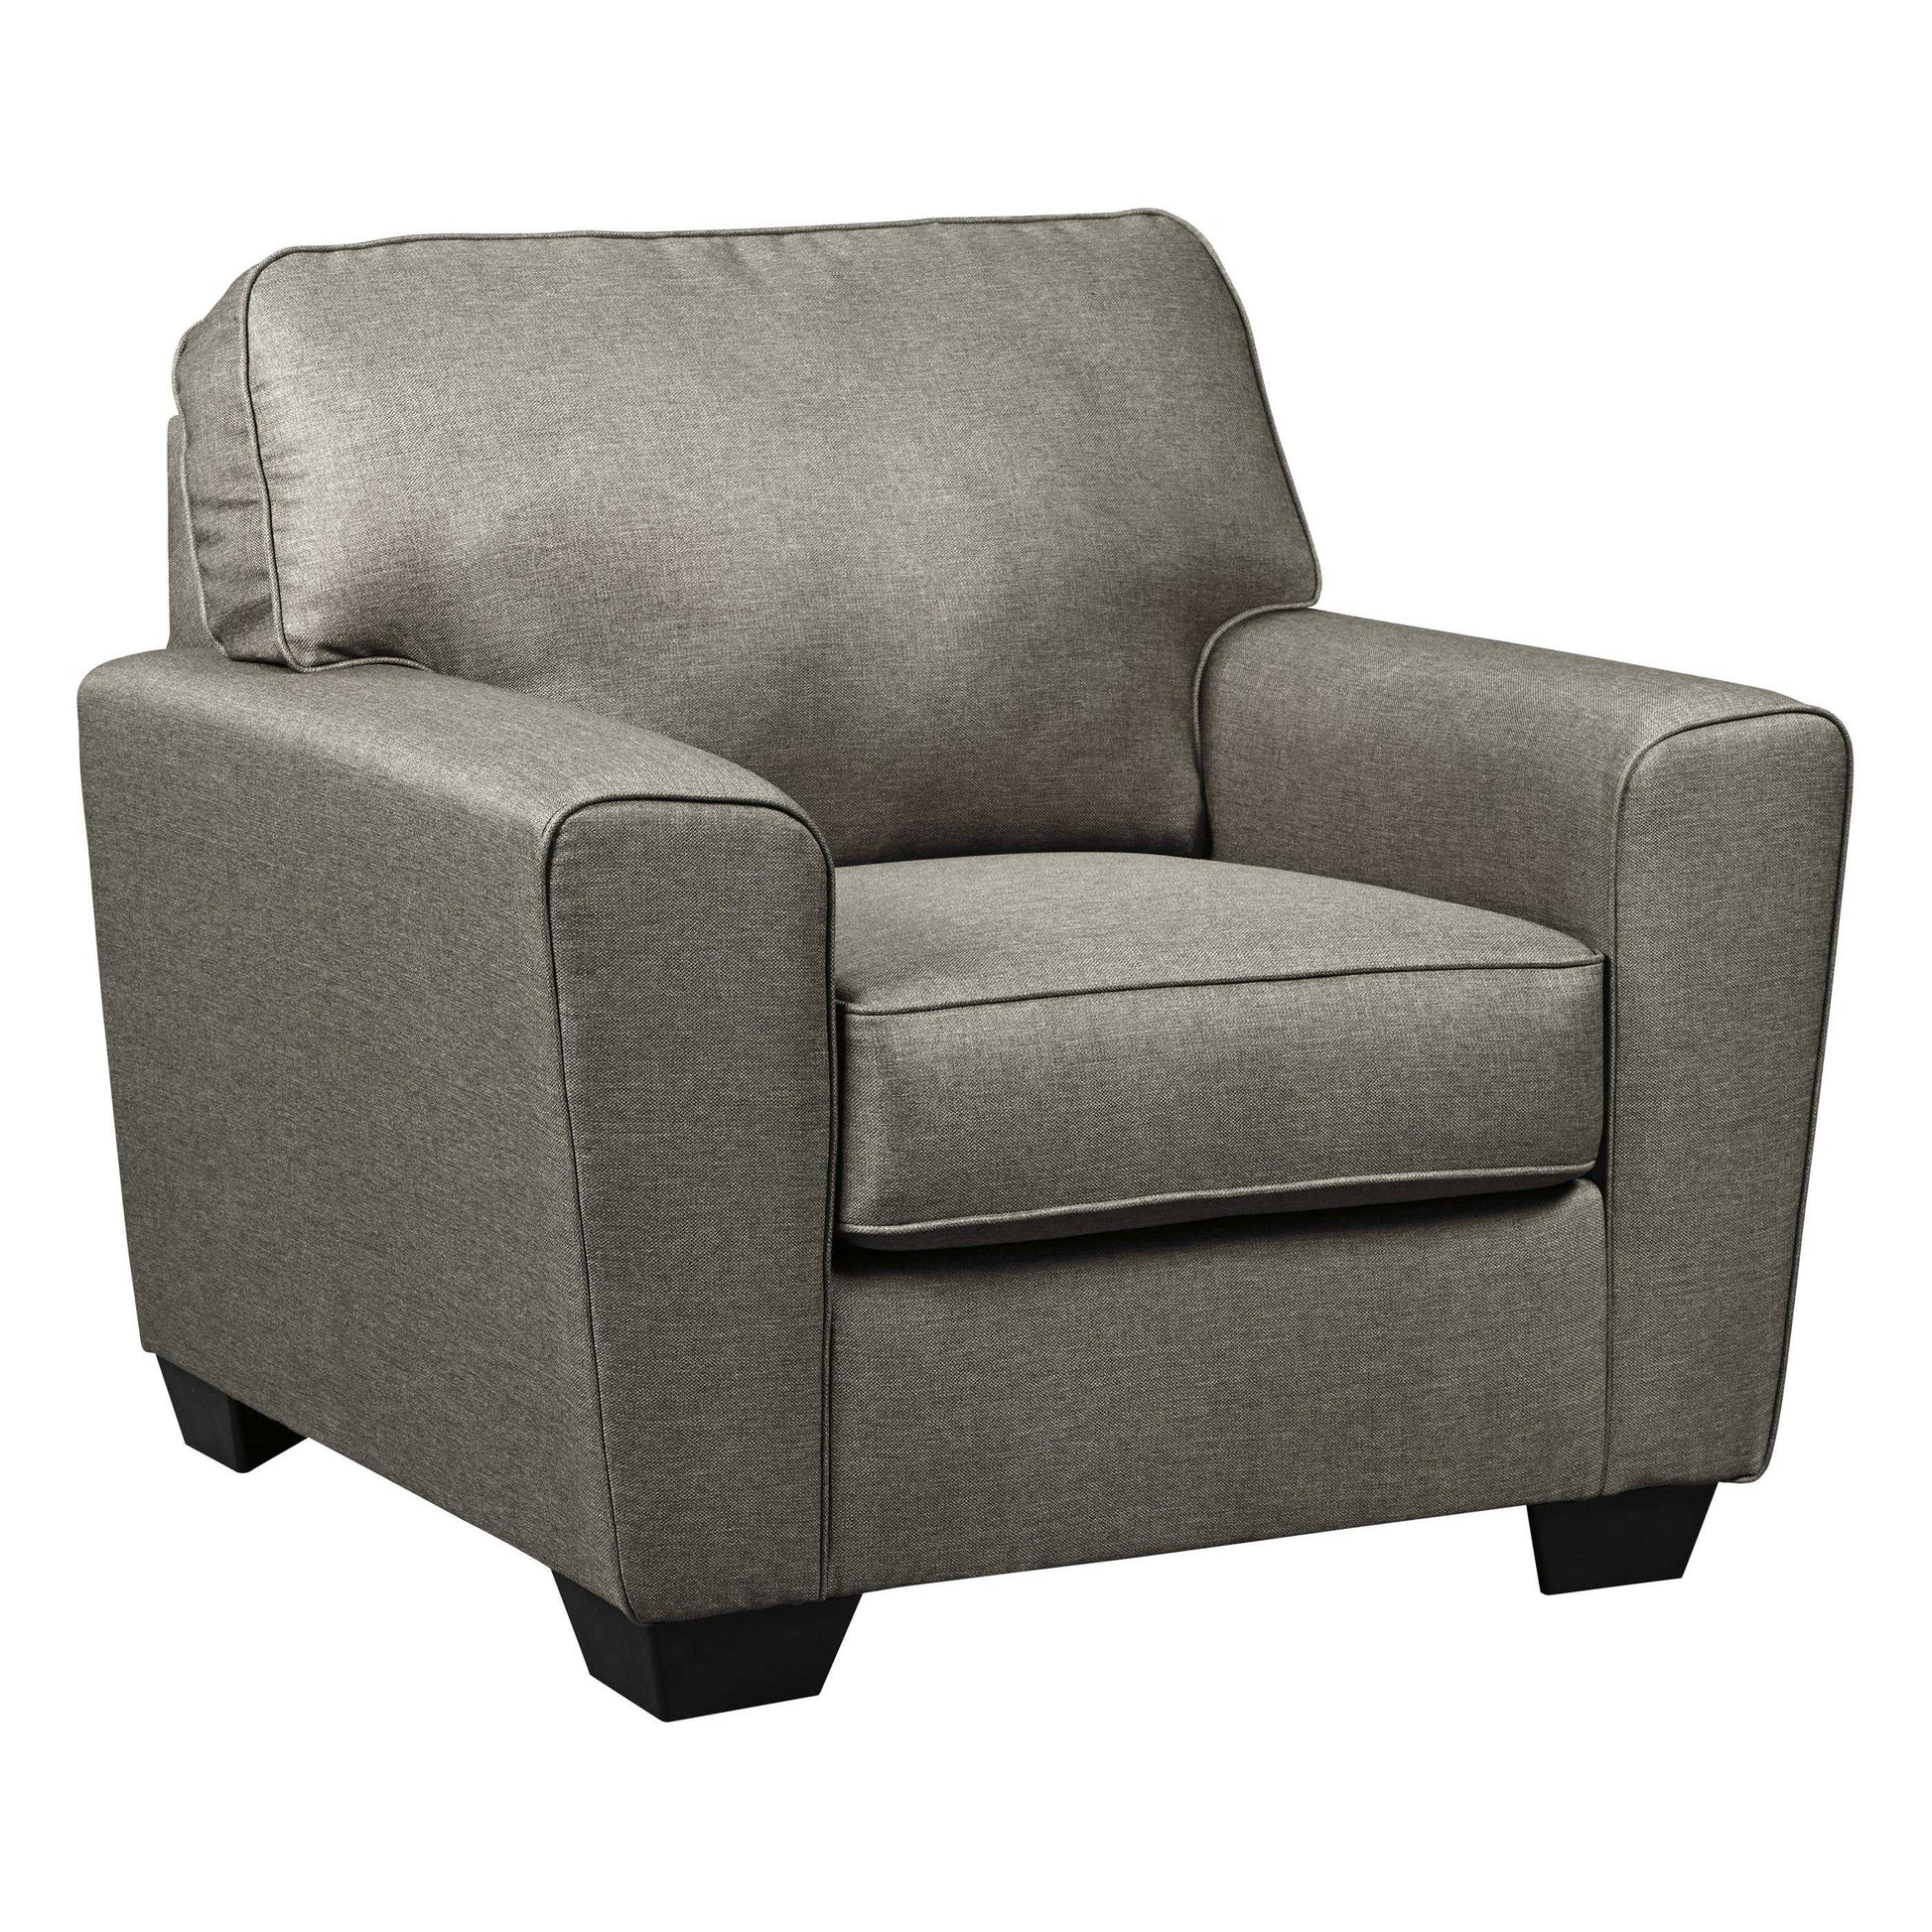 Benchcraft Calicho Stationary Fabric Chair 9120220